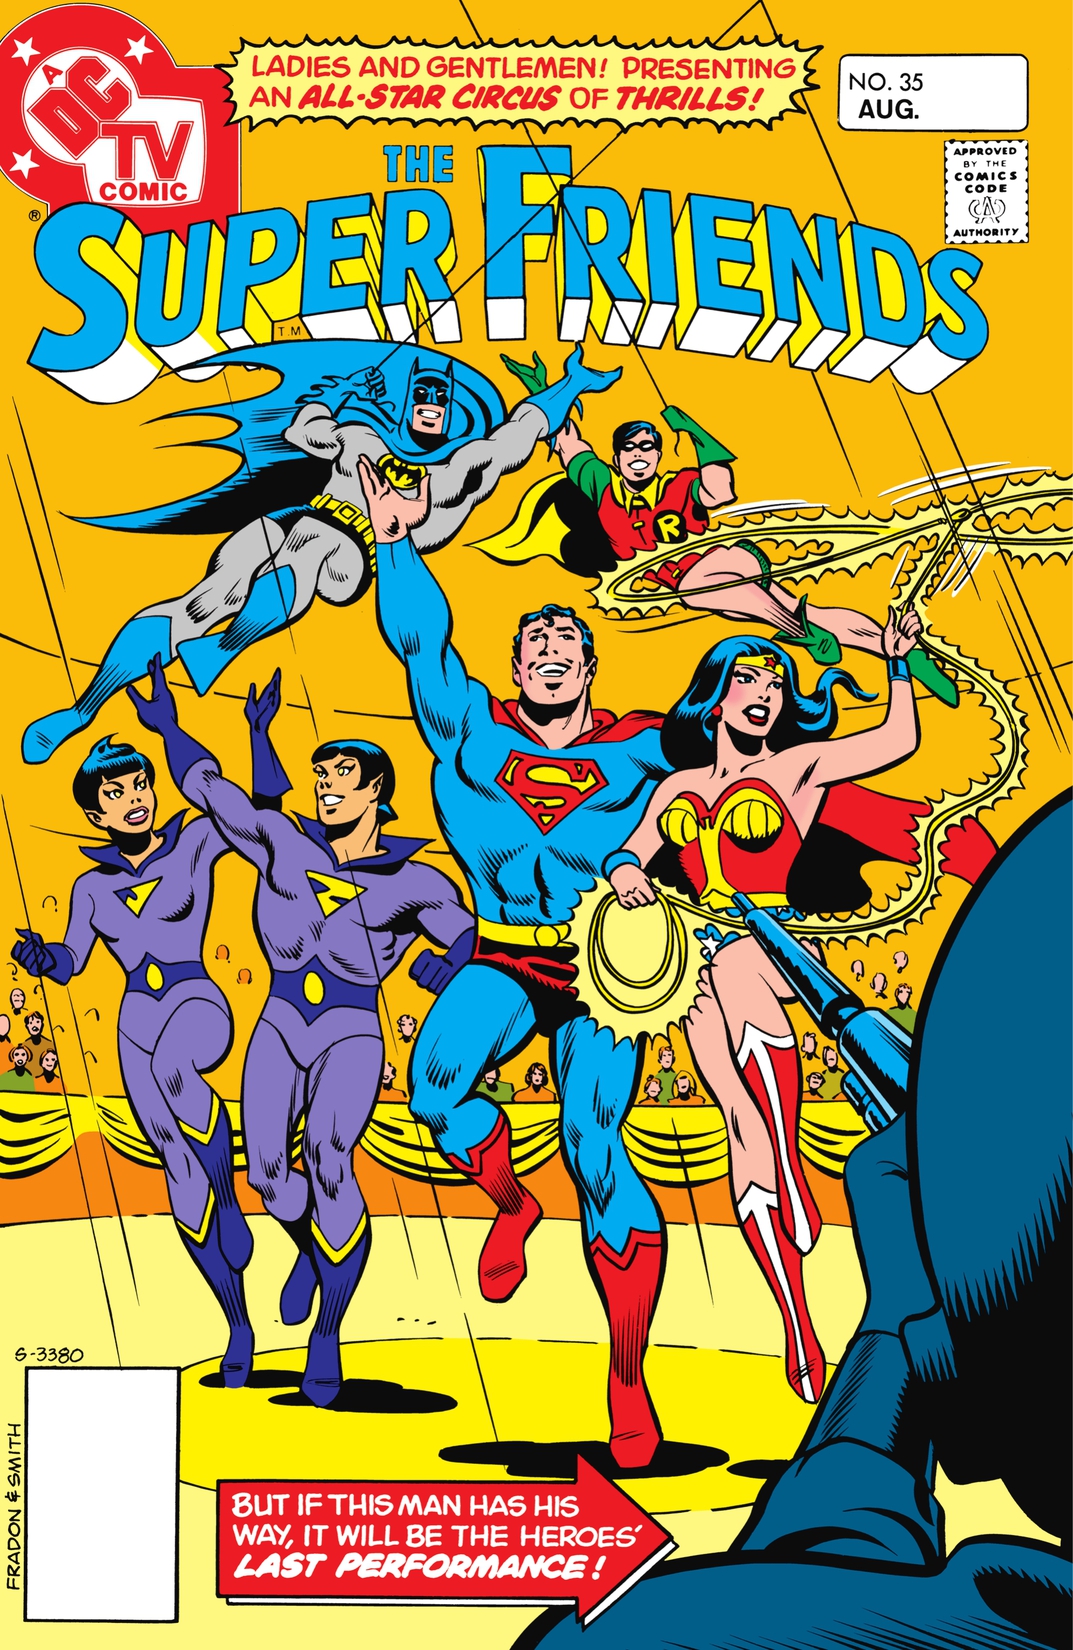 Super Friends (1976-1981) #35 preview images